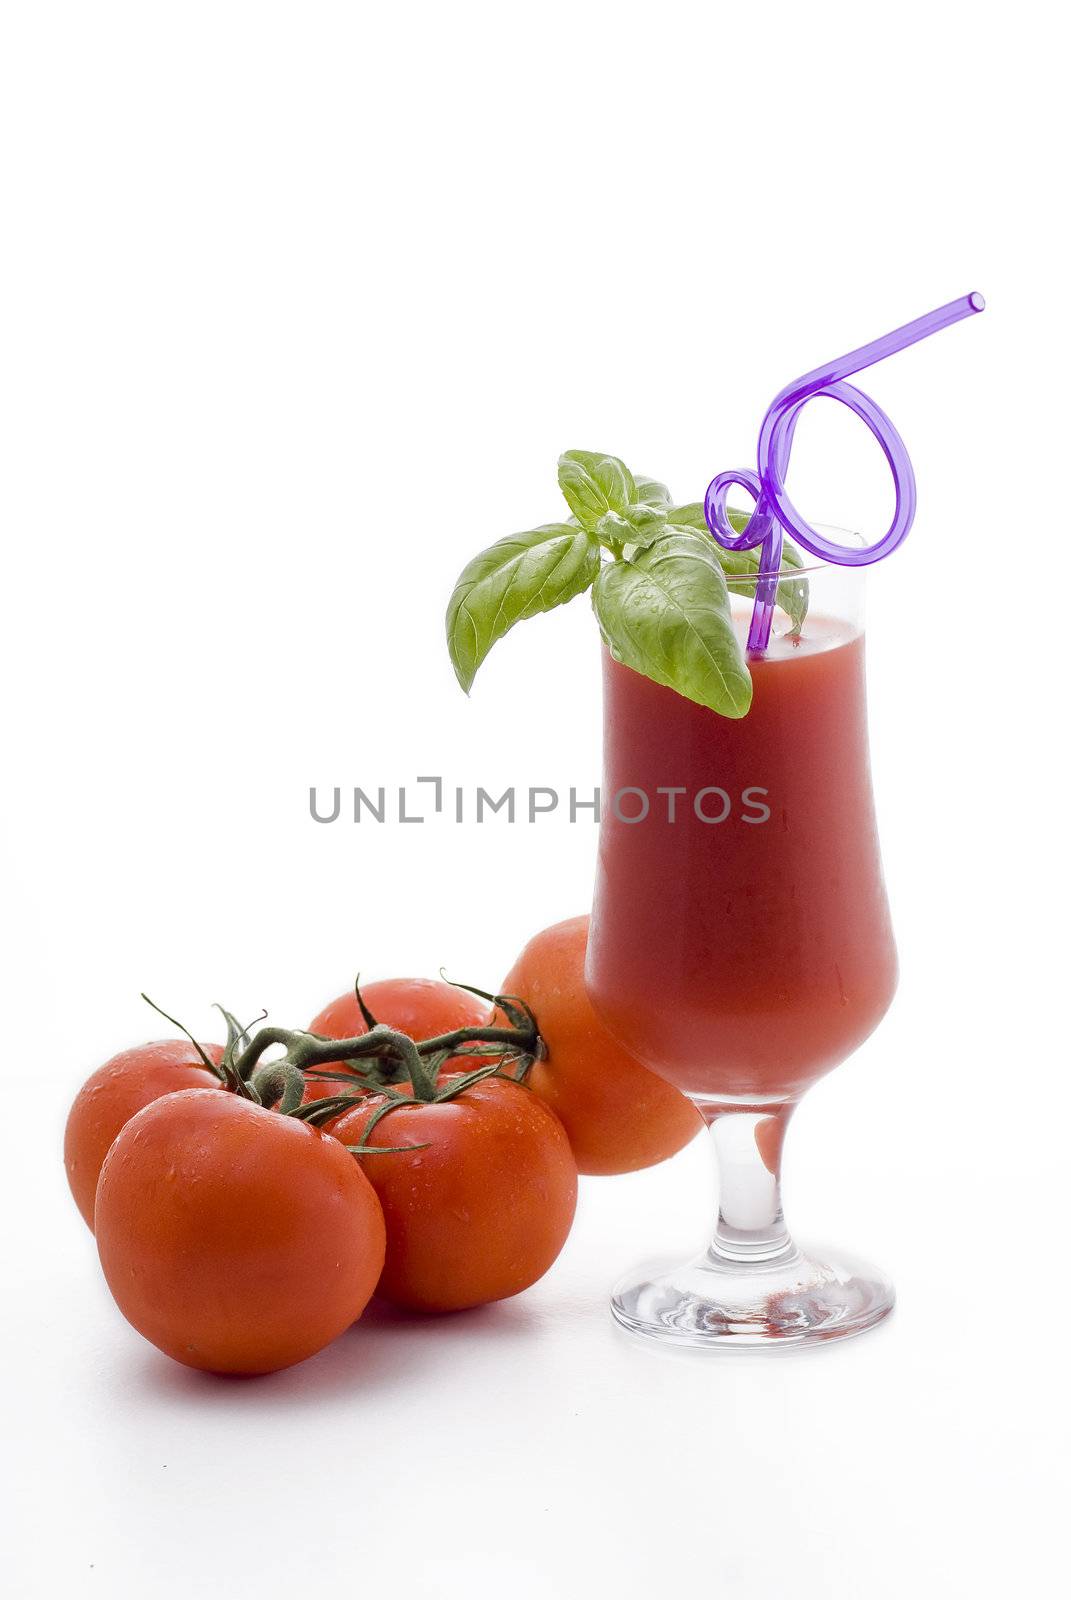 Tomato juice by caldix